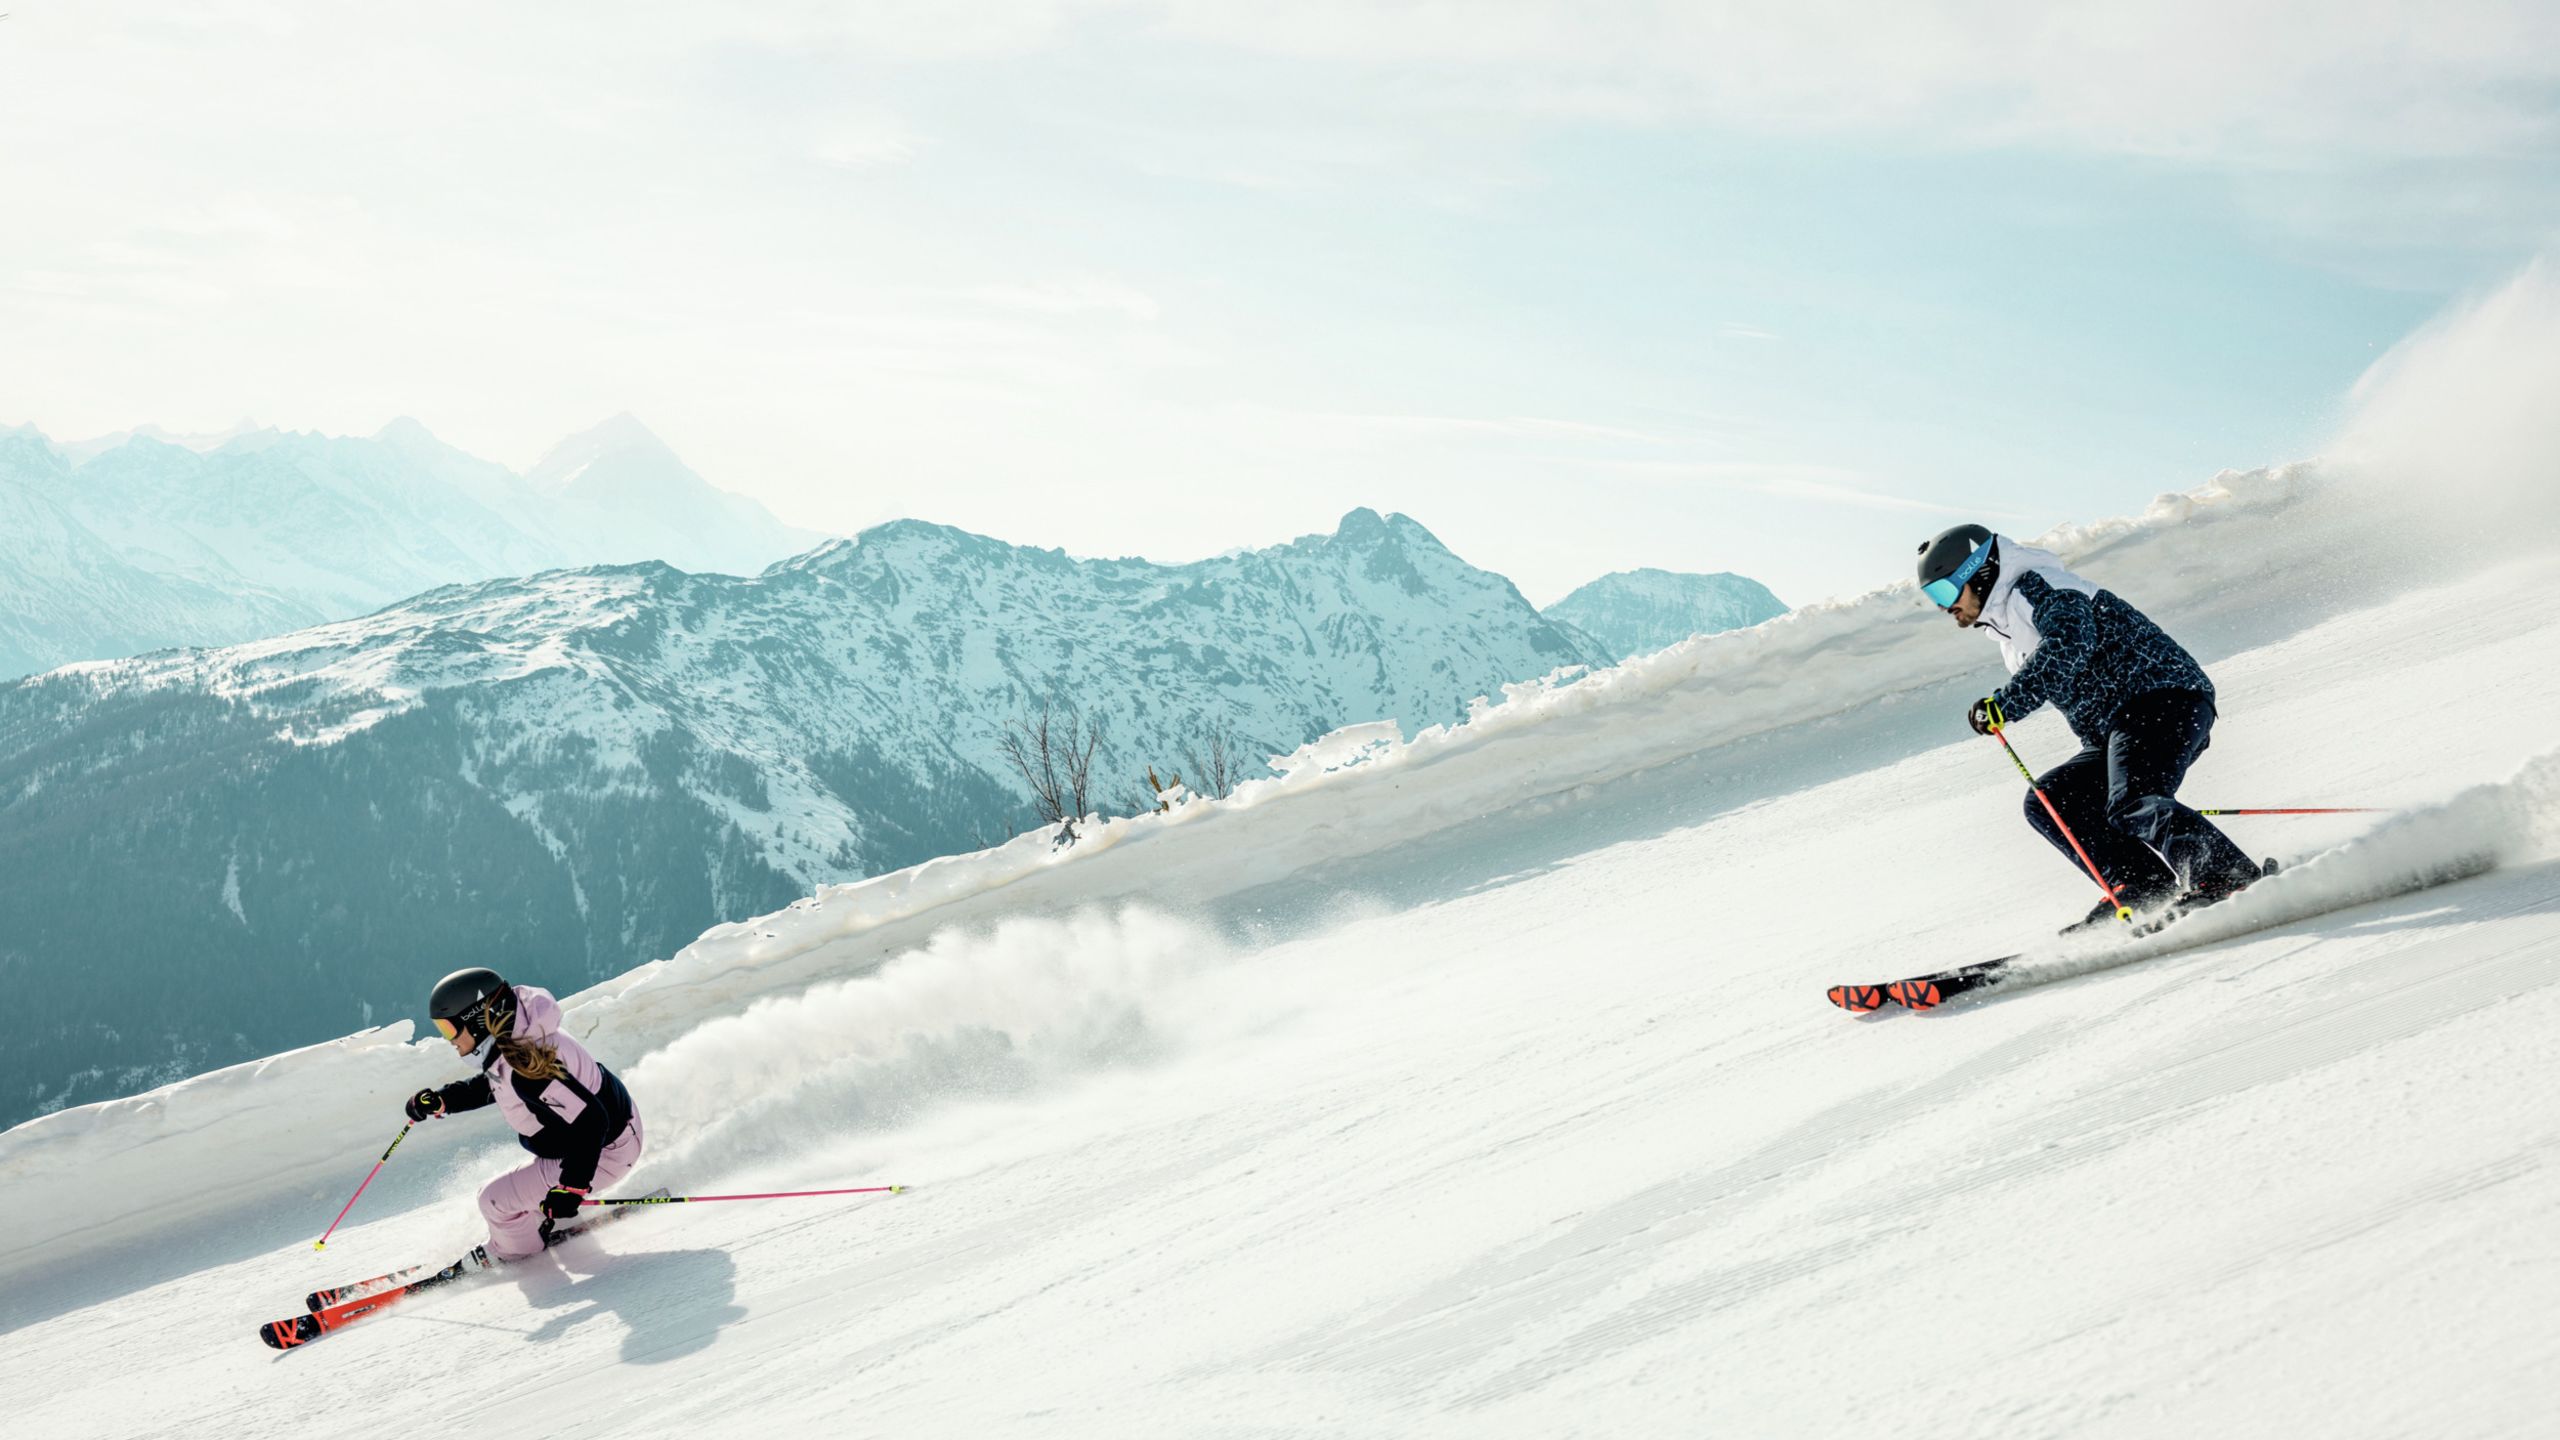 Mélanie and Loïc Meillard ski on the slopes of Thyon.